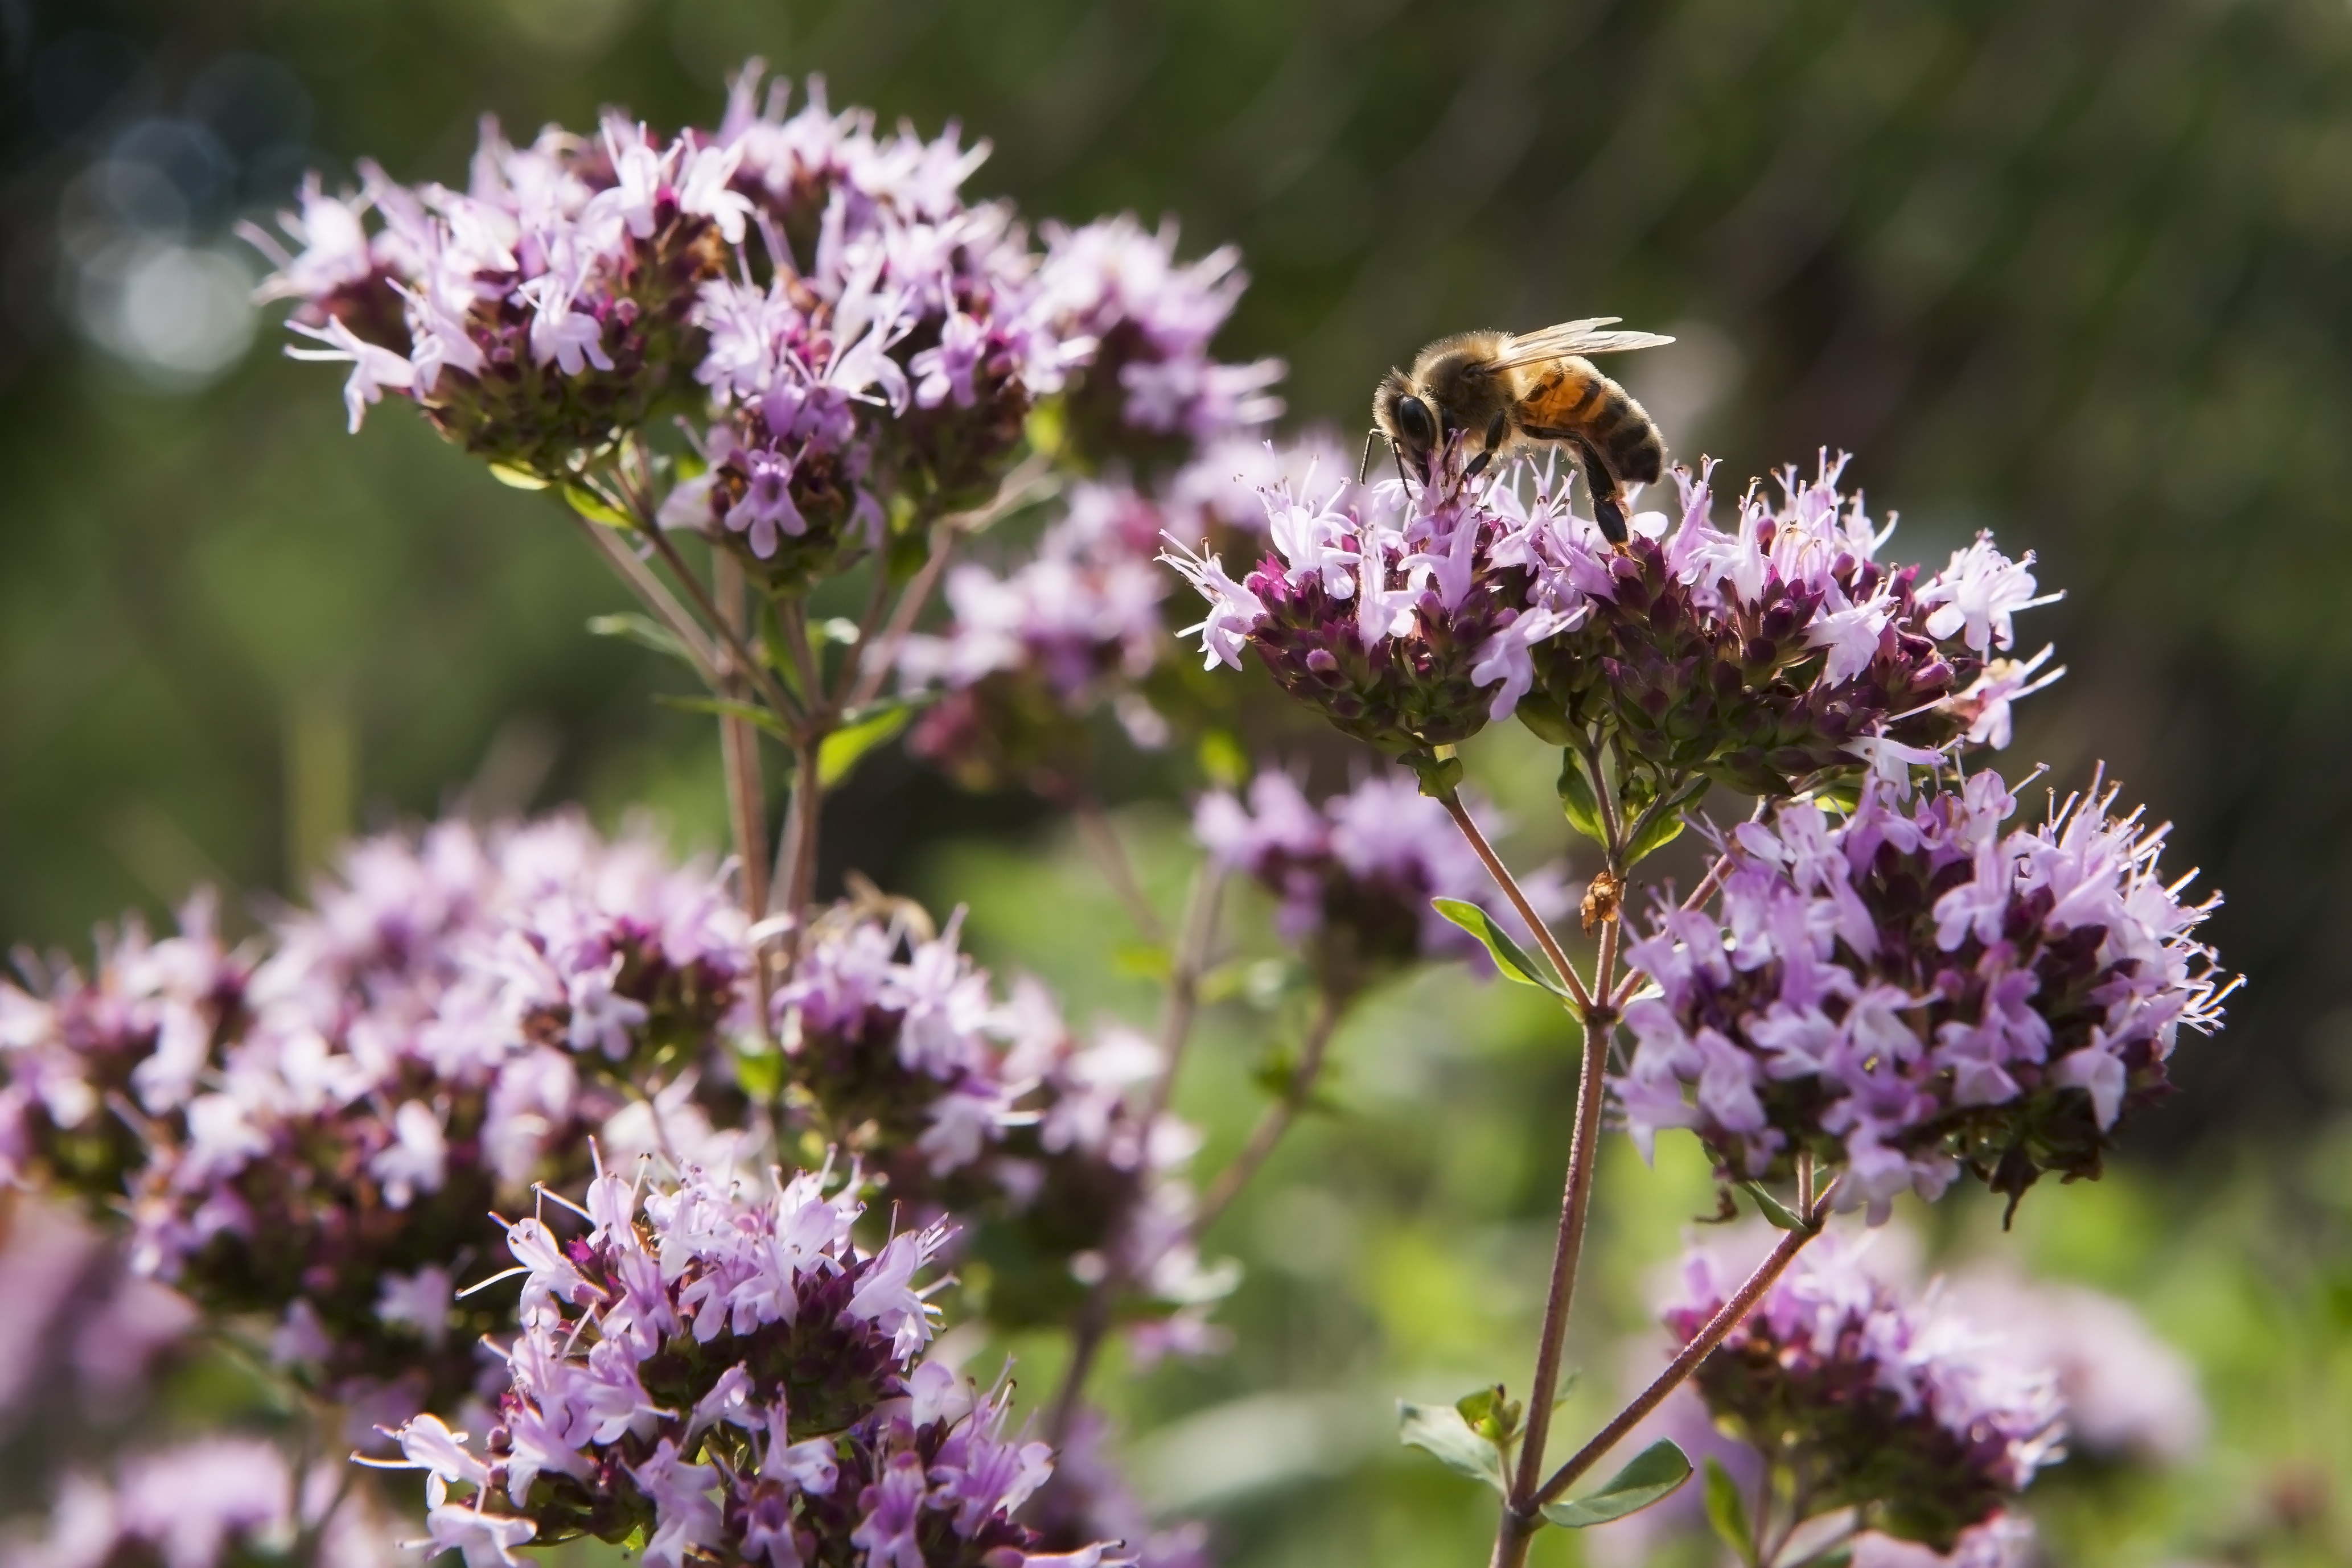 Honeybee on pink oregano flowers. (Thinkstock/PA)